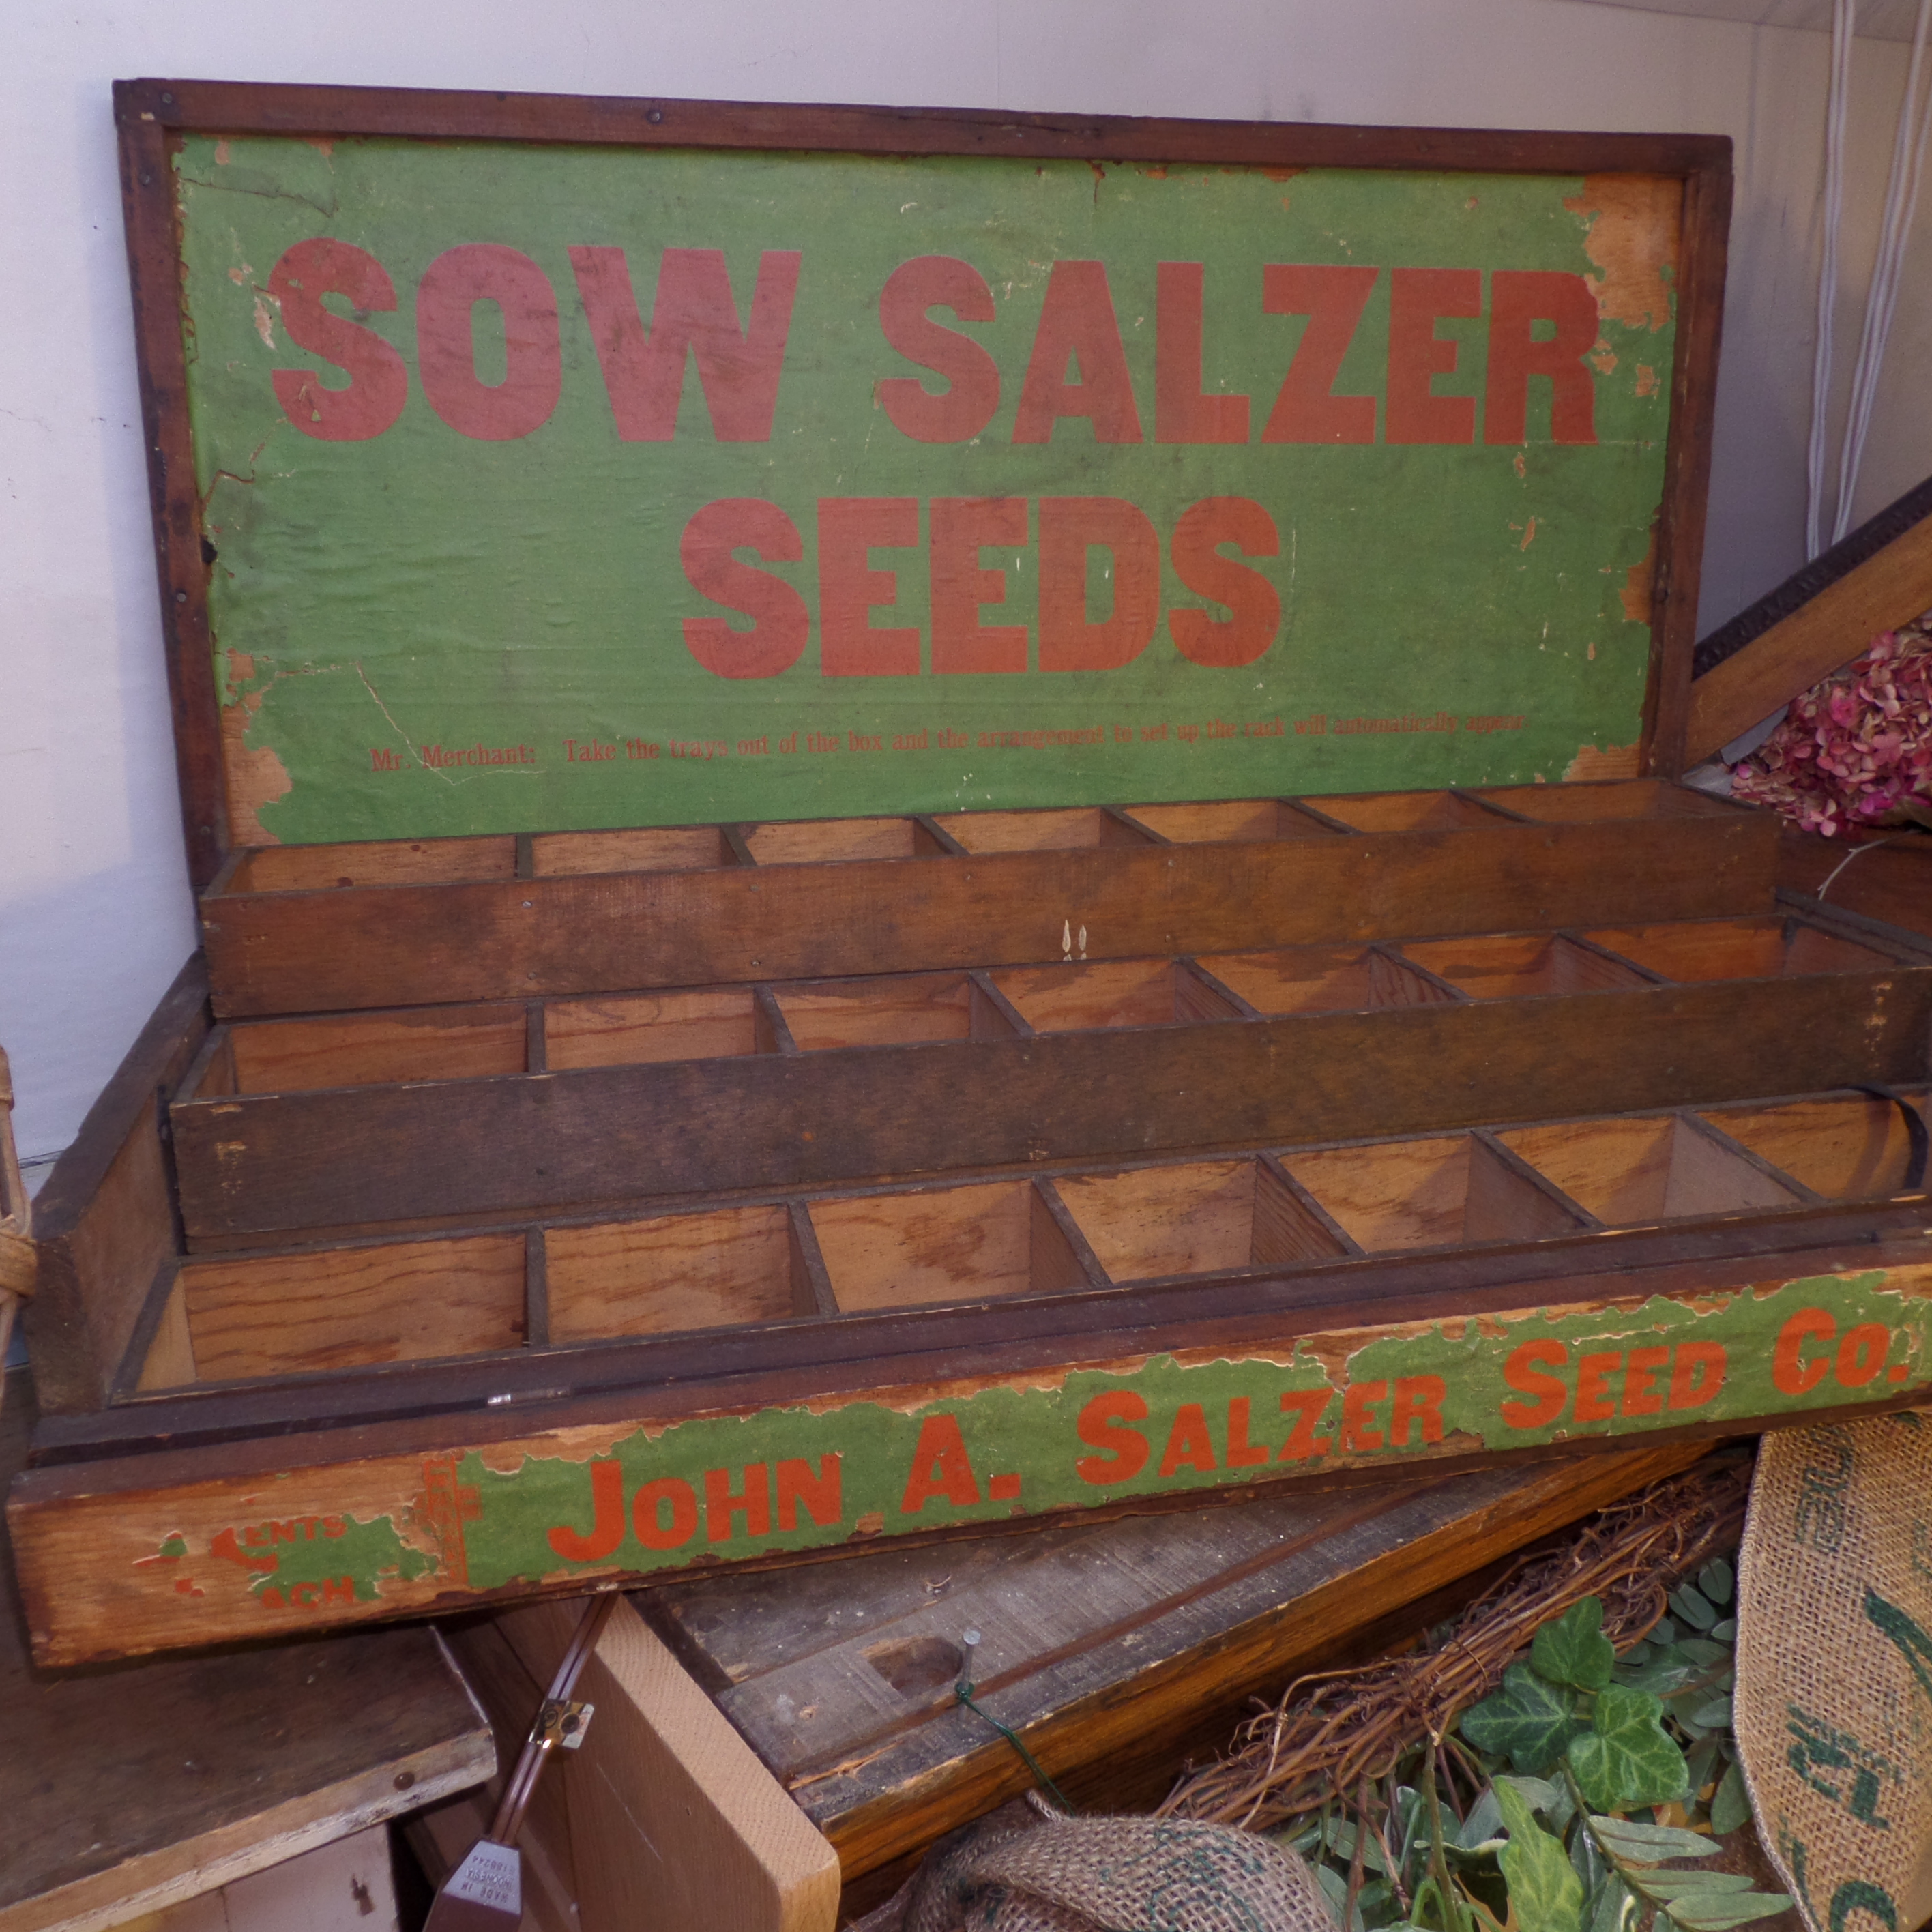 Sow Salzer Seeds - Seed Box